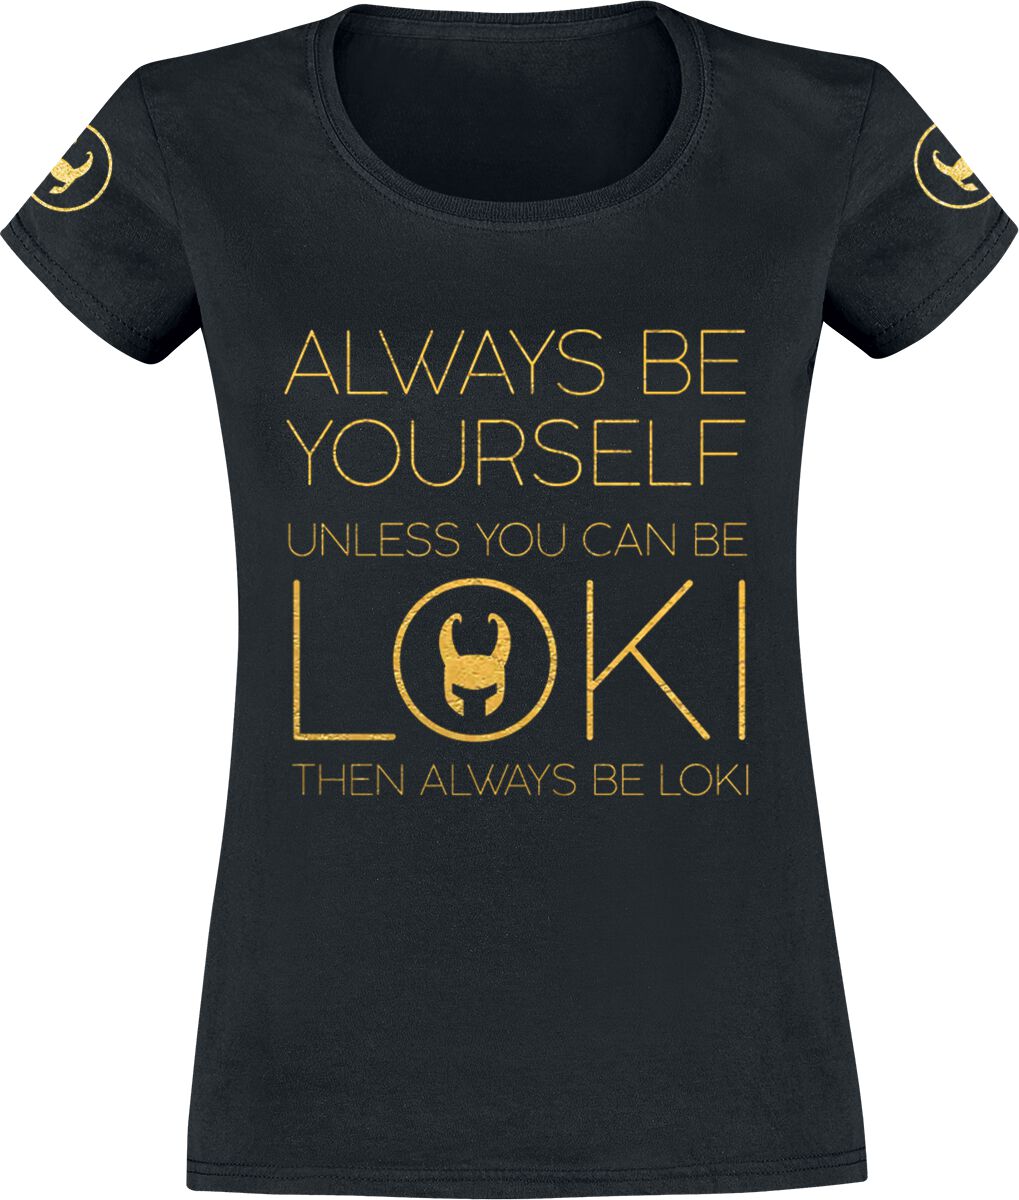 Loki Always Be Yourself T-Shirt schwarz in XL